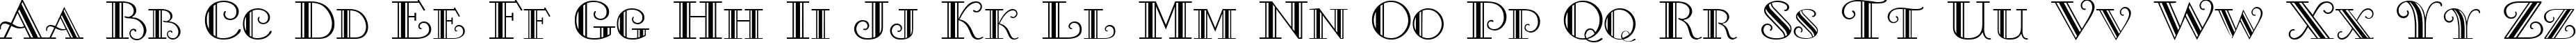 Пример написания английского алфавита шрифтом Monte-Carlo